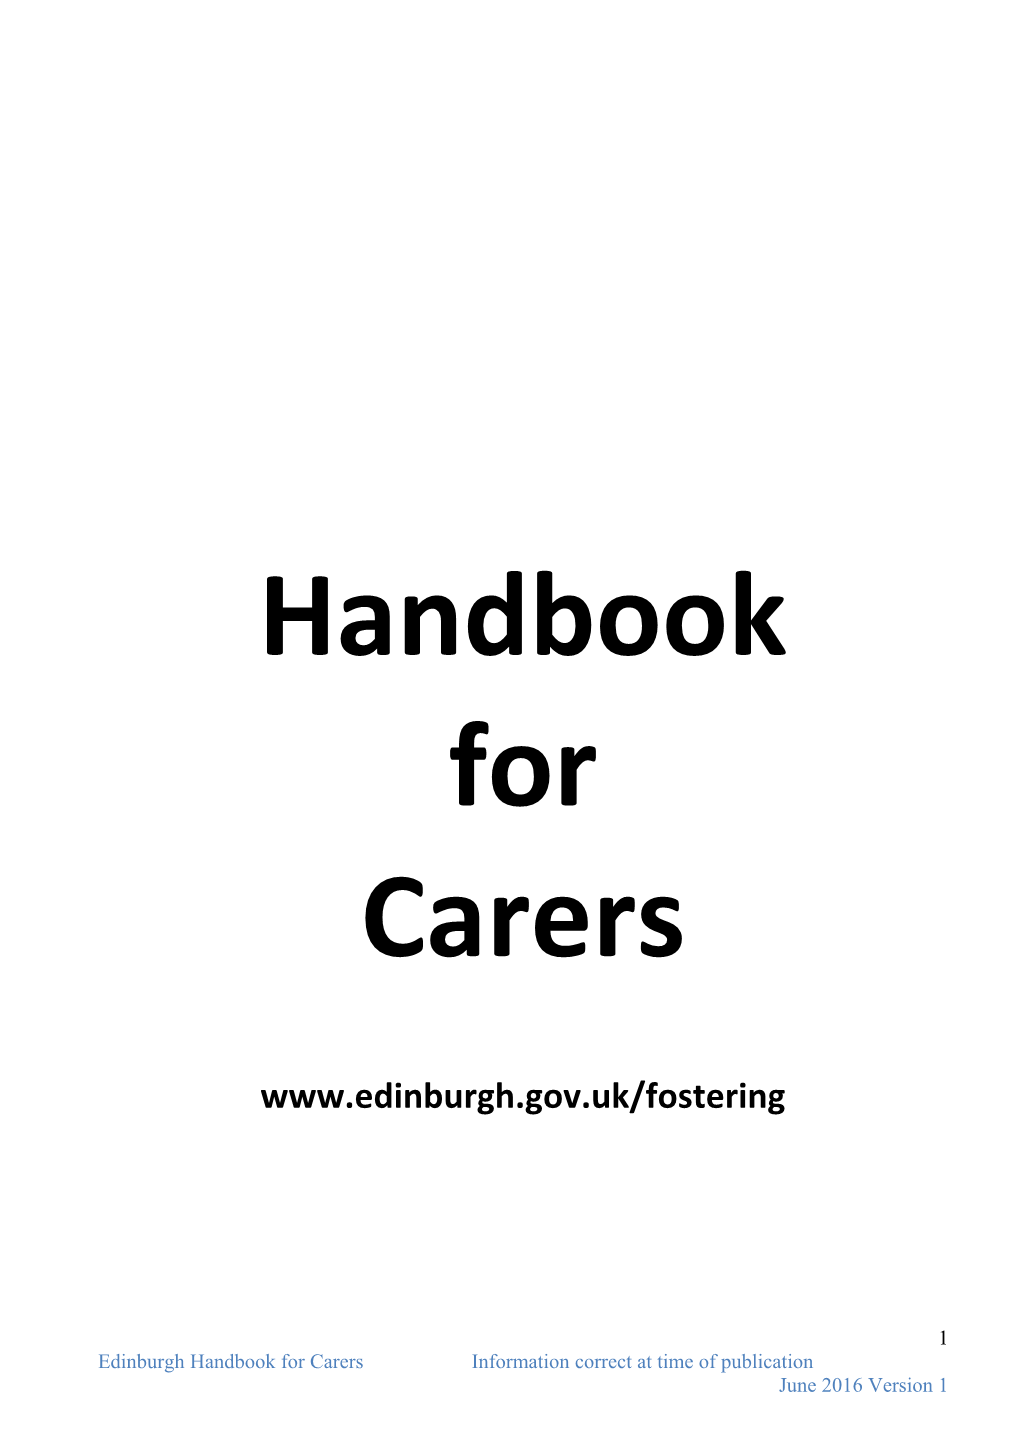 Welcome to Your Updated Carers Handbook - Online!